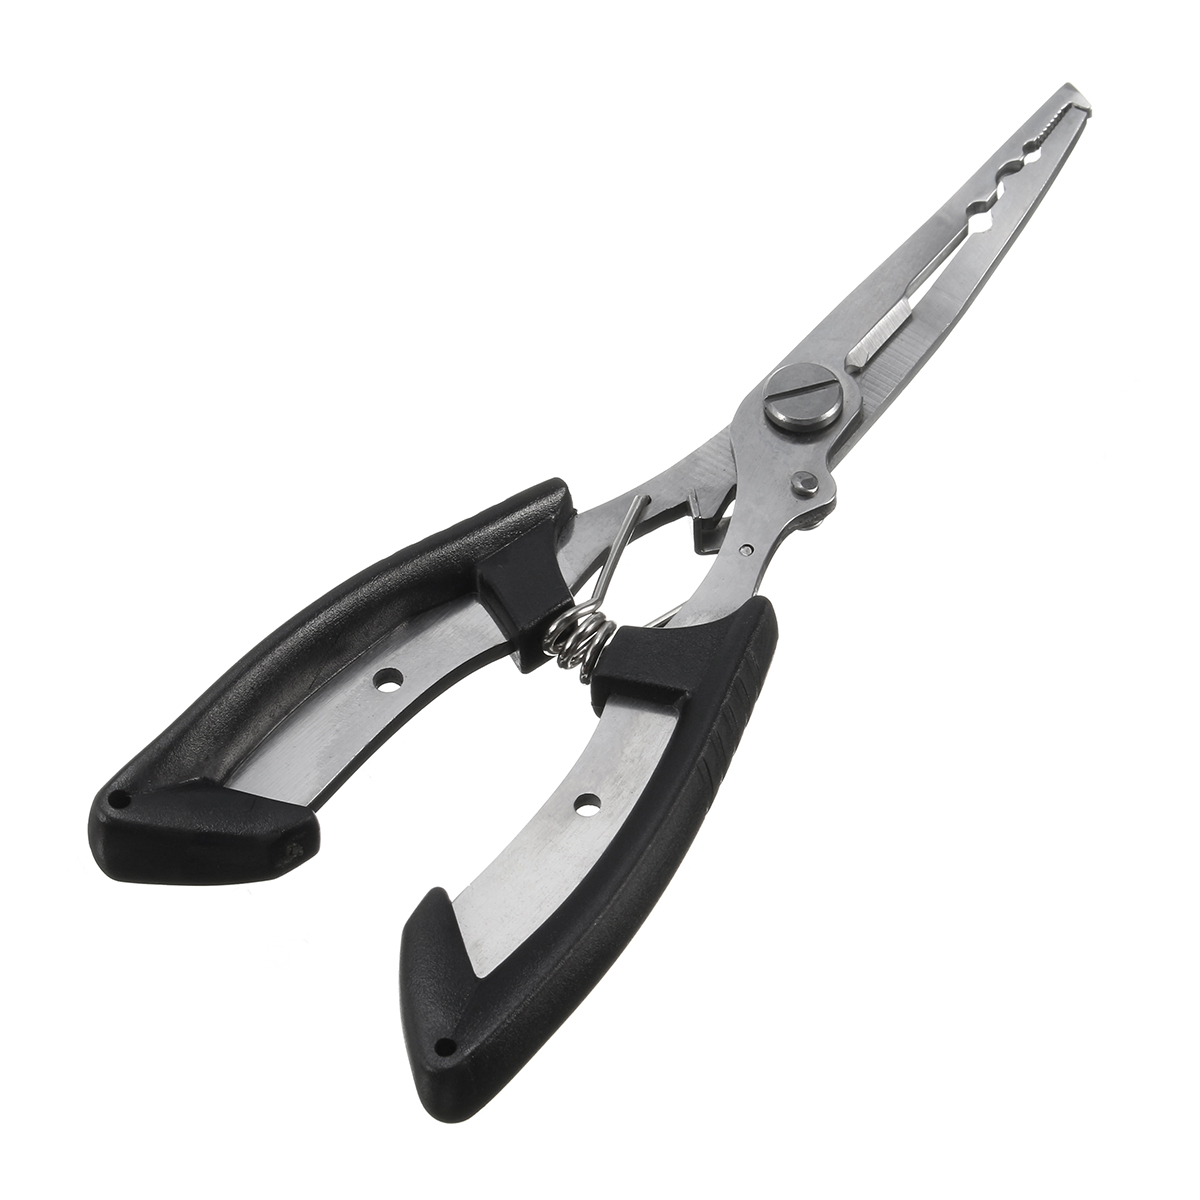 Stainless-Steel-Fishing-Pliers-Plierweiter-Scissors-Line-Cutter-Hook-Tackle-Tool-1151463-6